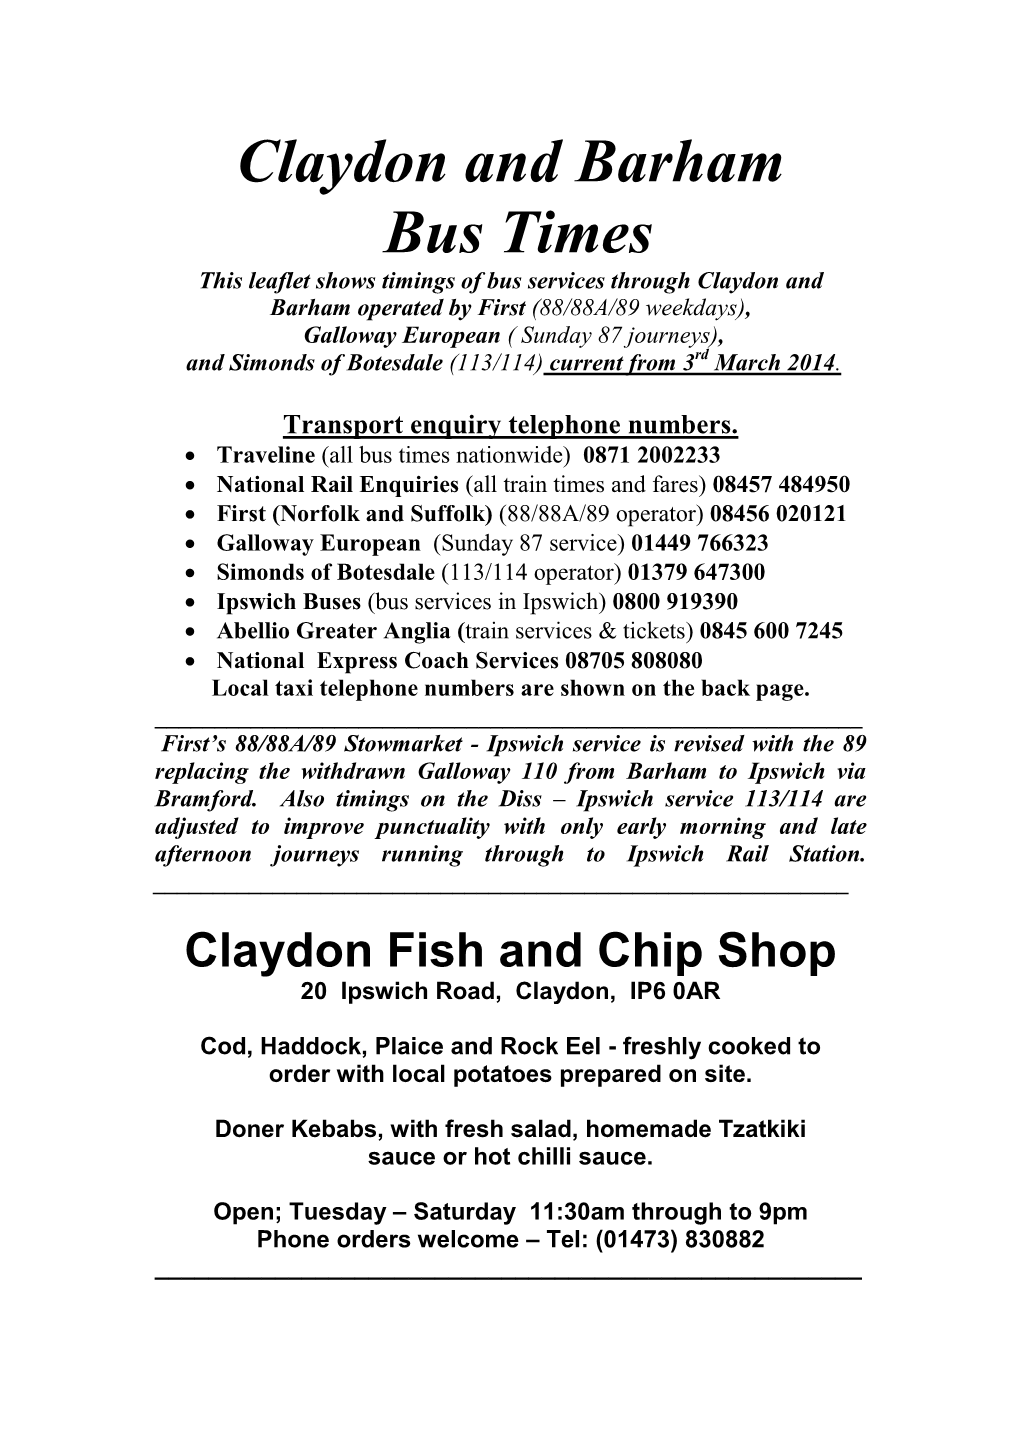 Claydon and Barham Bus Times